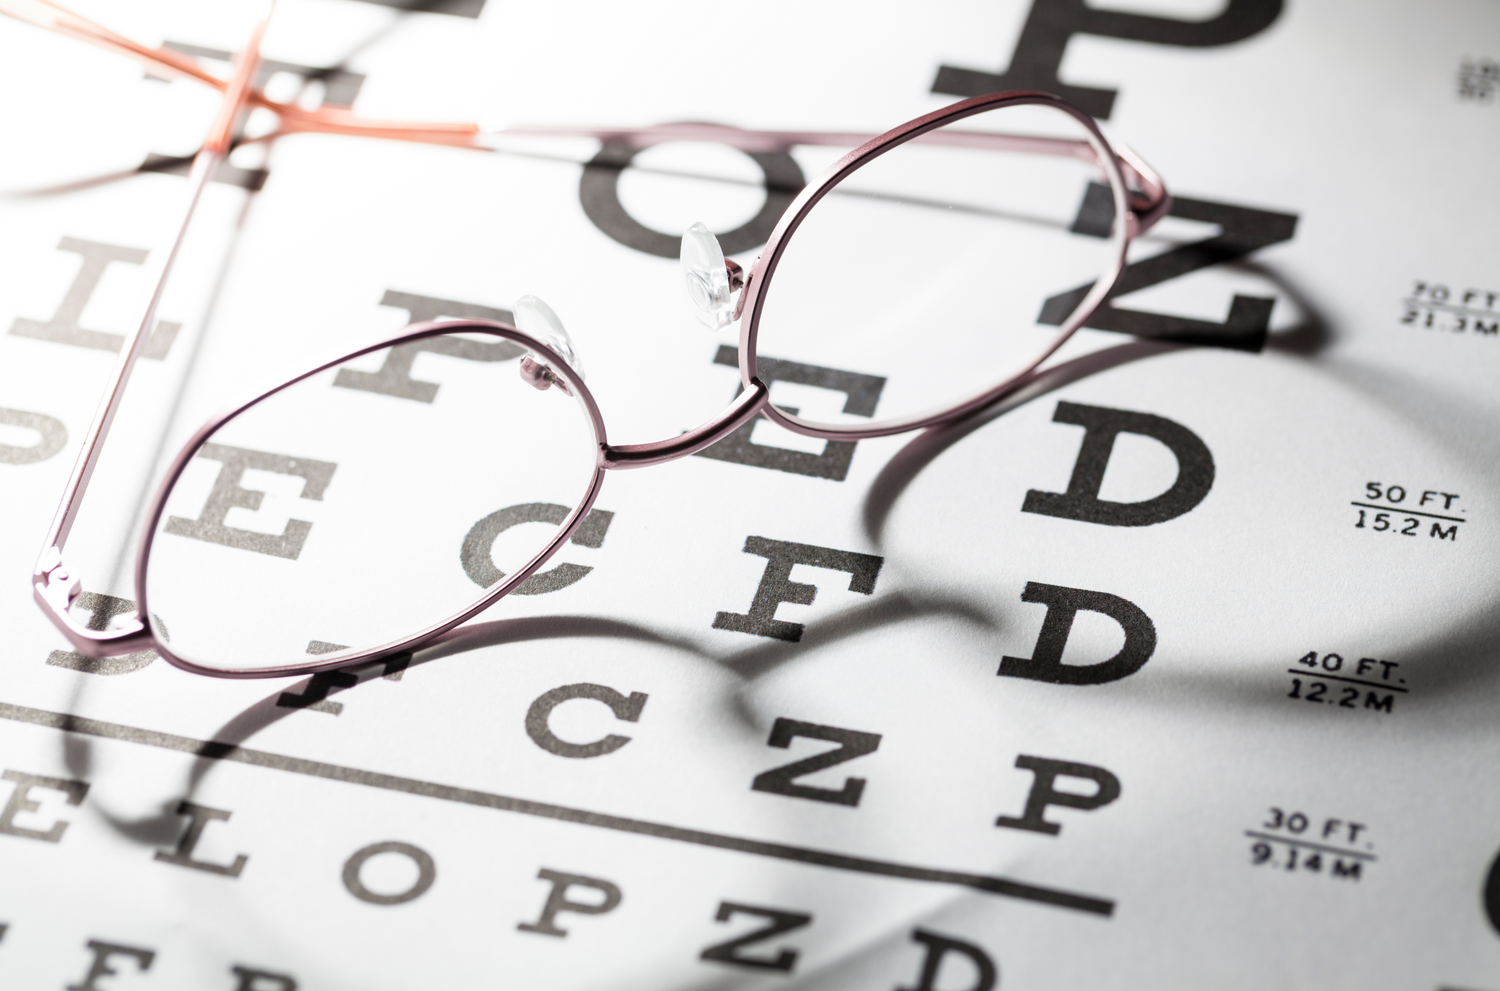 Eye exams materials - Glasses and an alphabet sheet